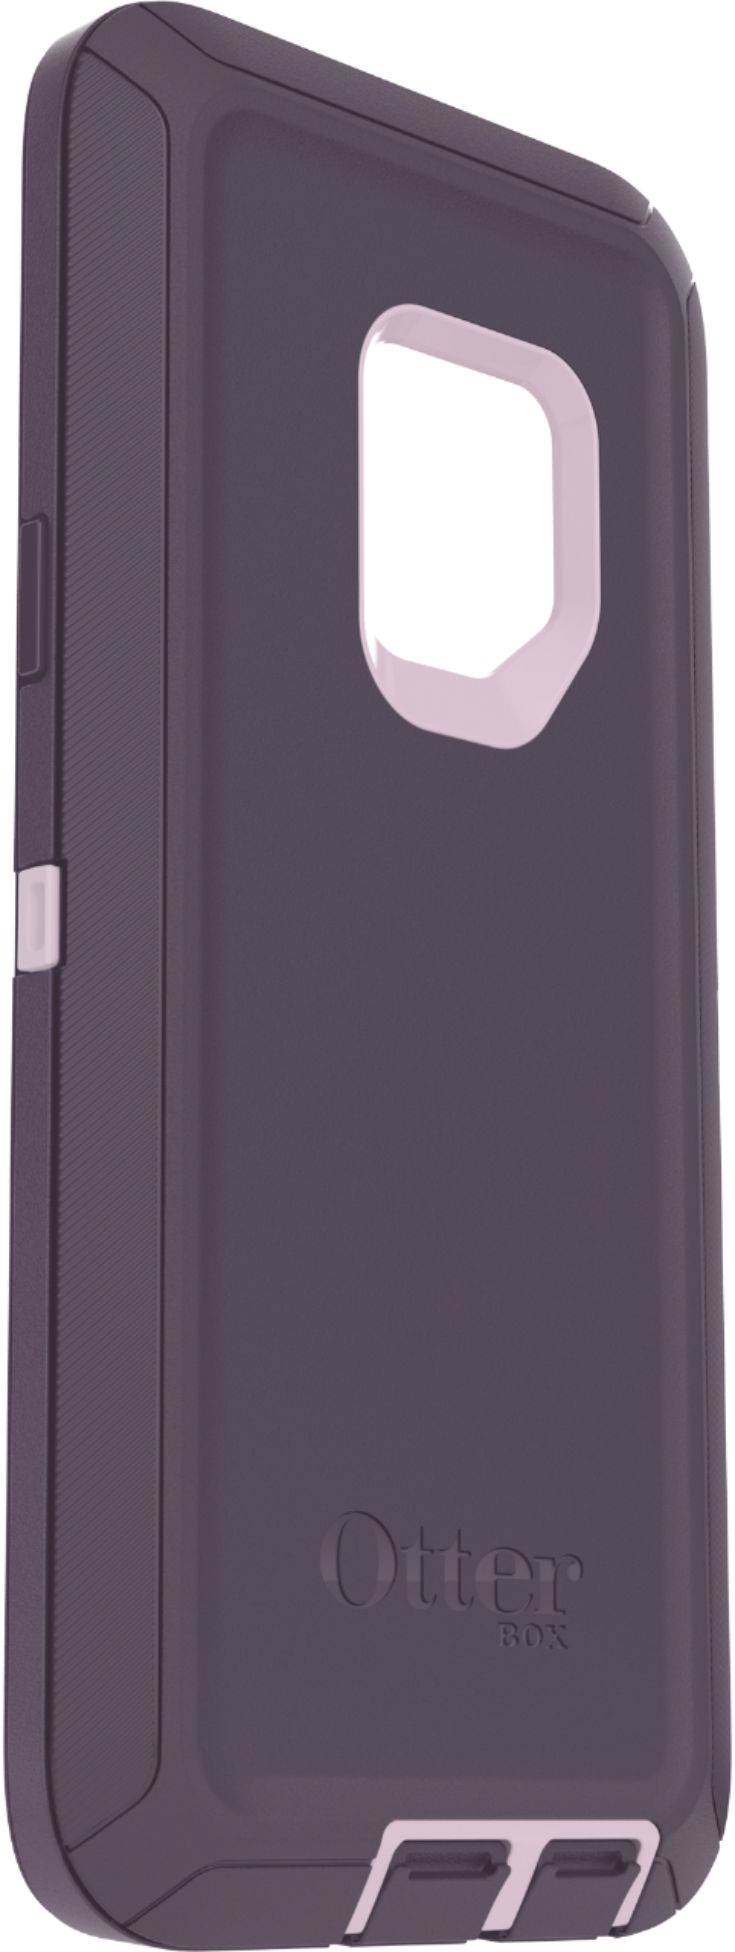 heel Krachtcel Pelagisch Best Buy: OtterBox Defender Series Case for Samsung Galaxy S9 Purple Nebula  50496BBR